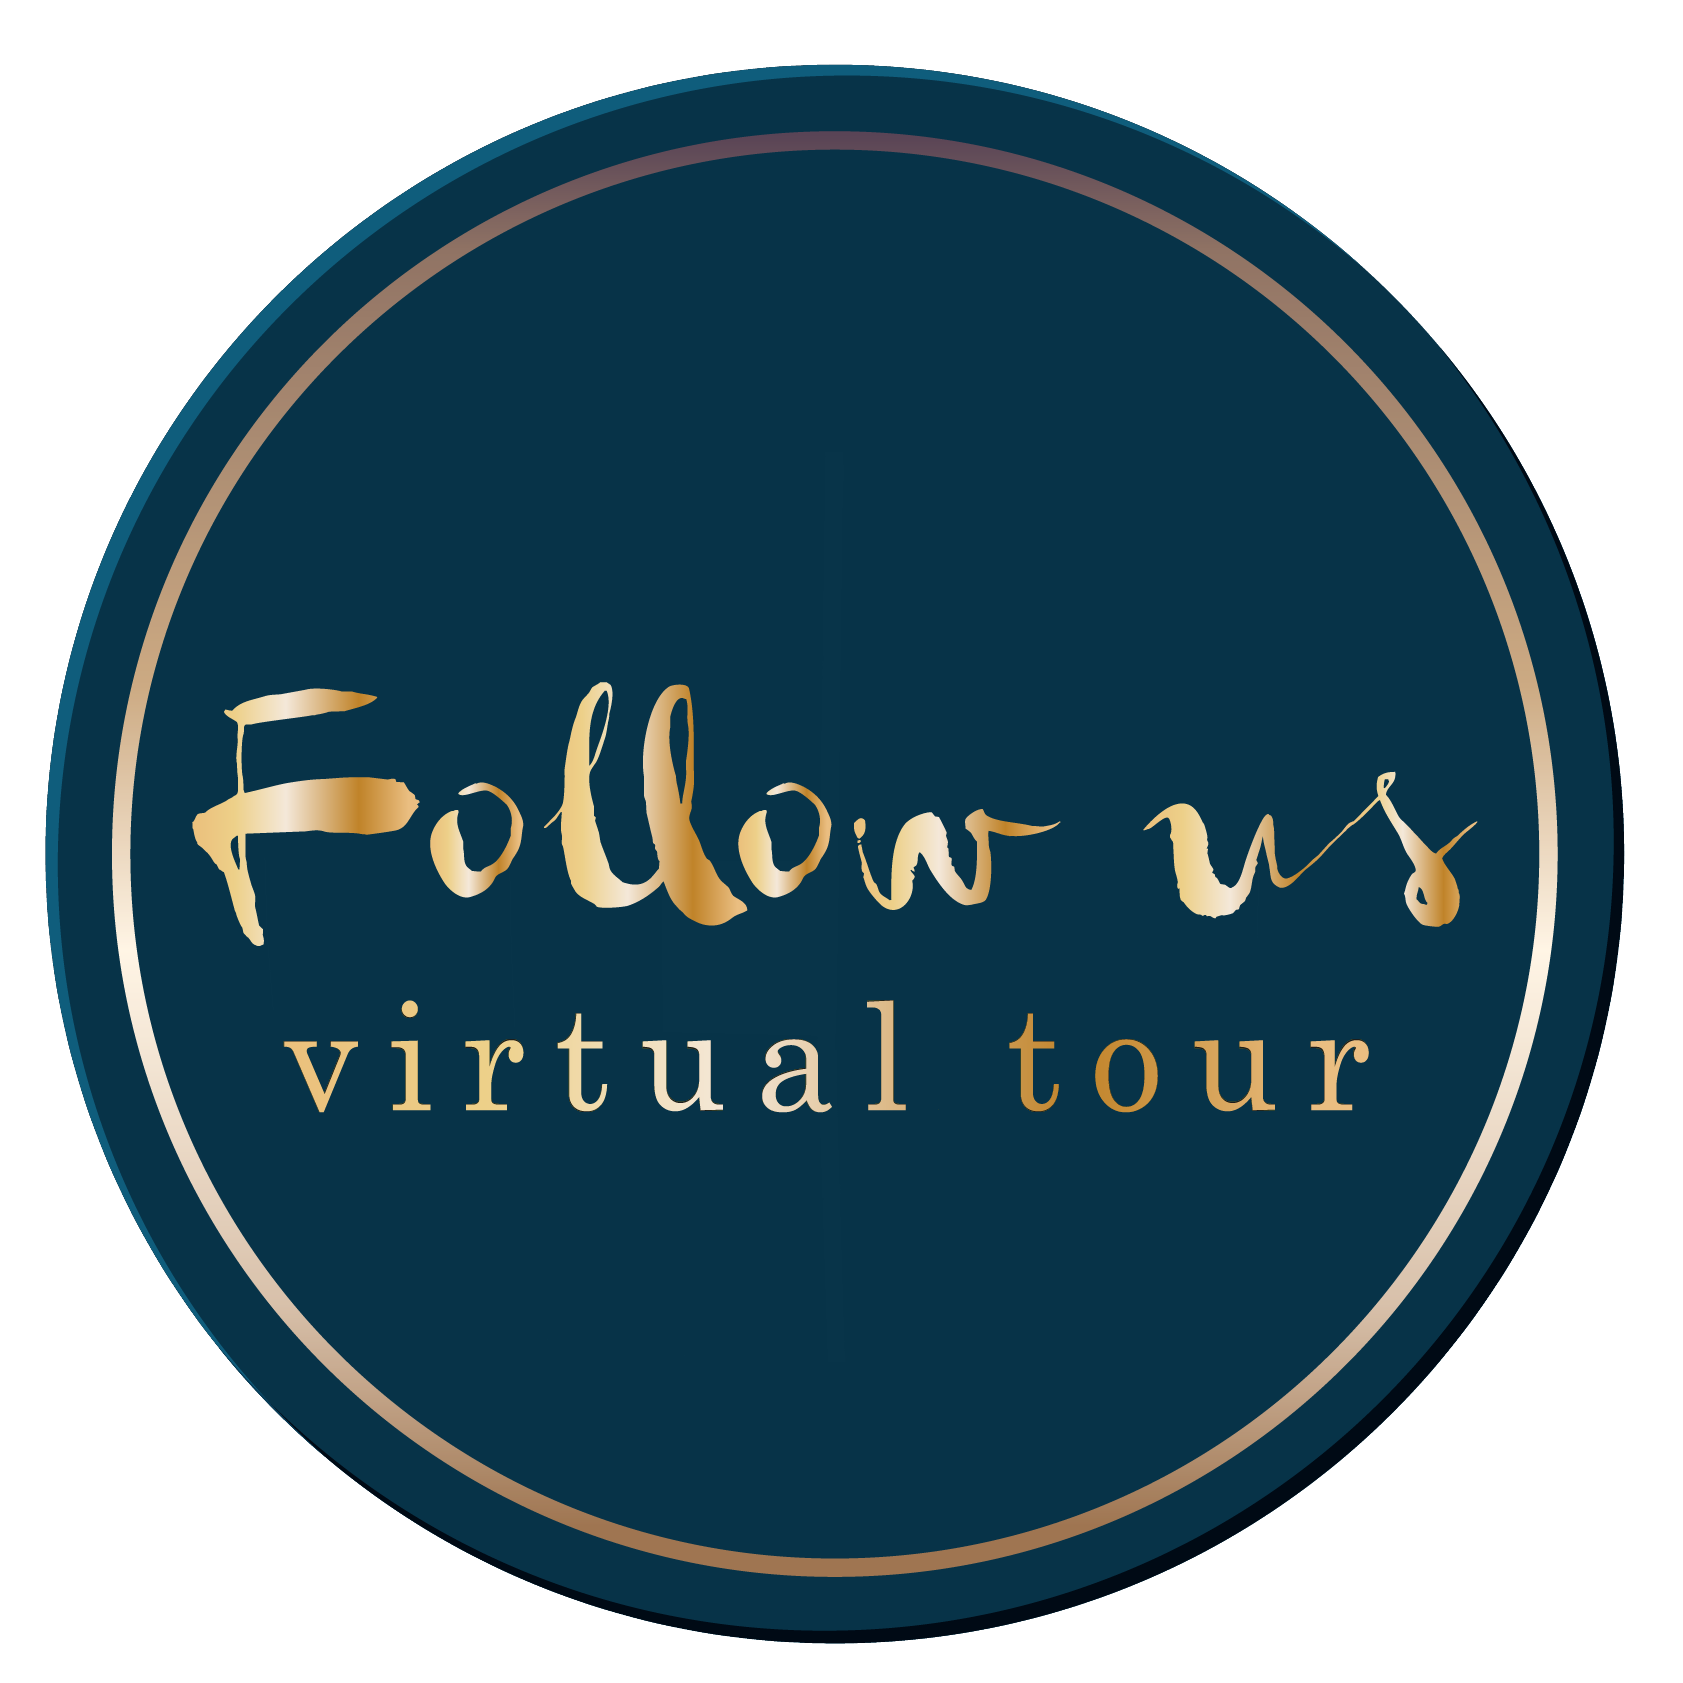 Follow Us Virtual Tour